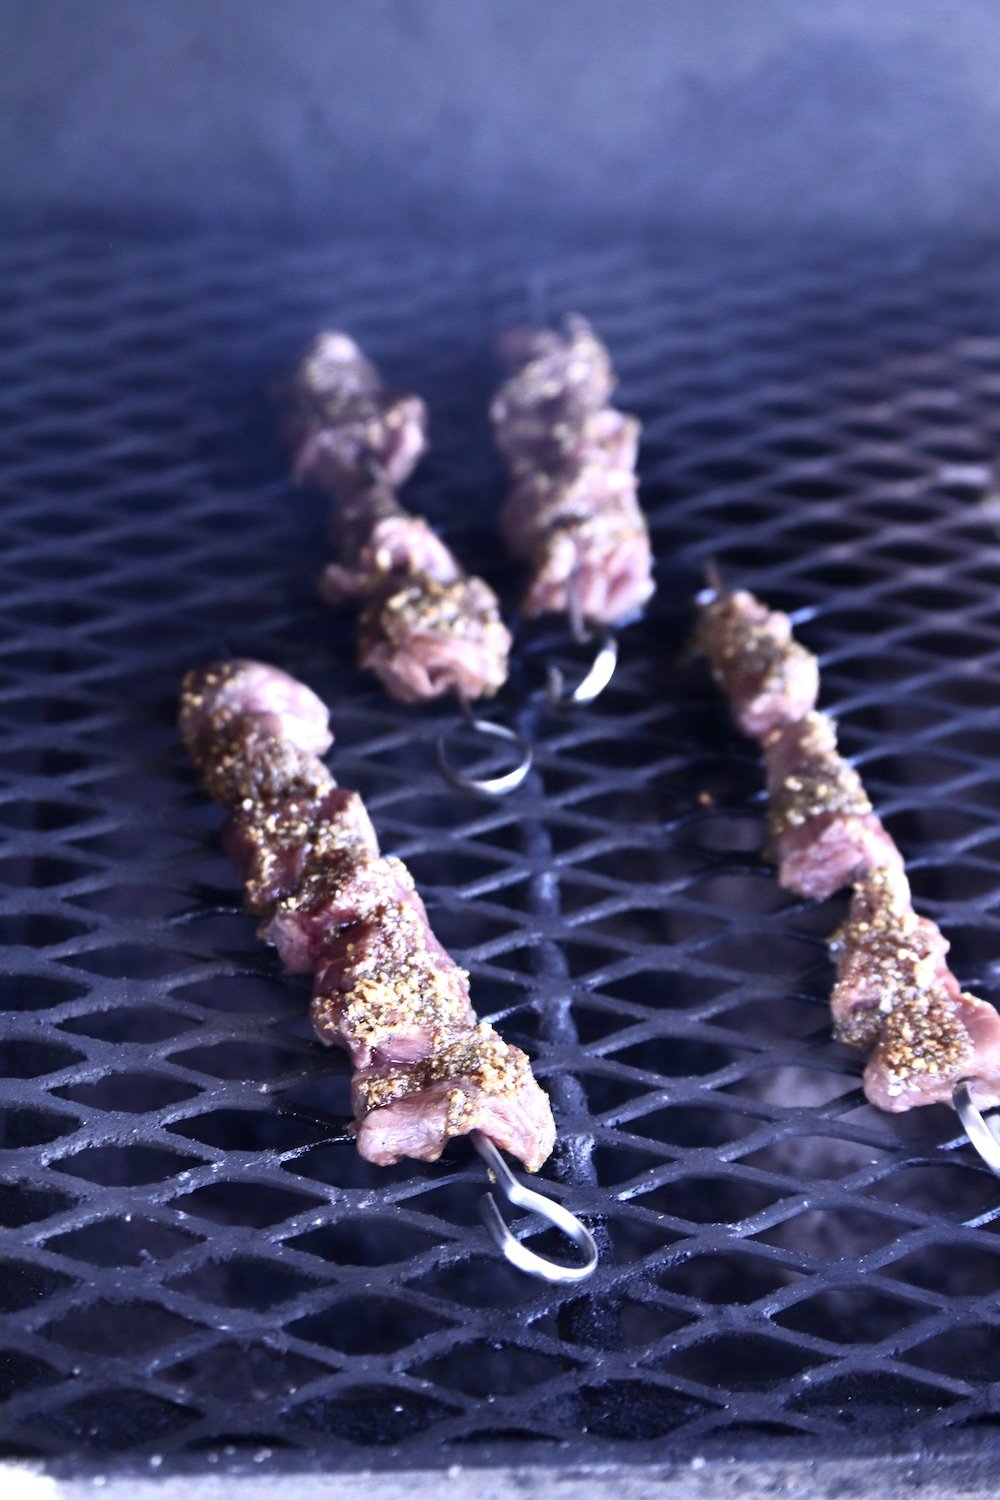 steak skewers on a grill